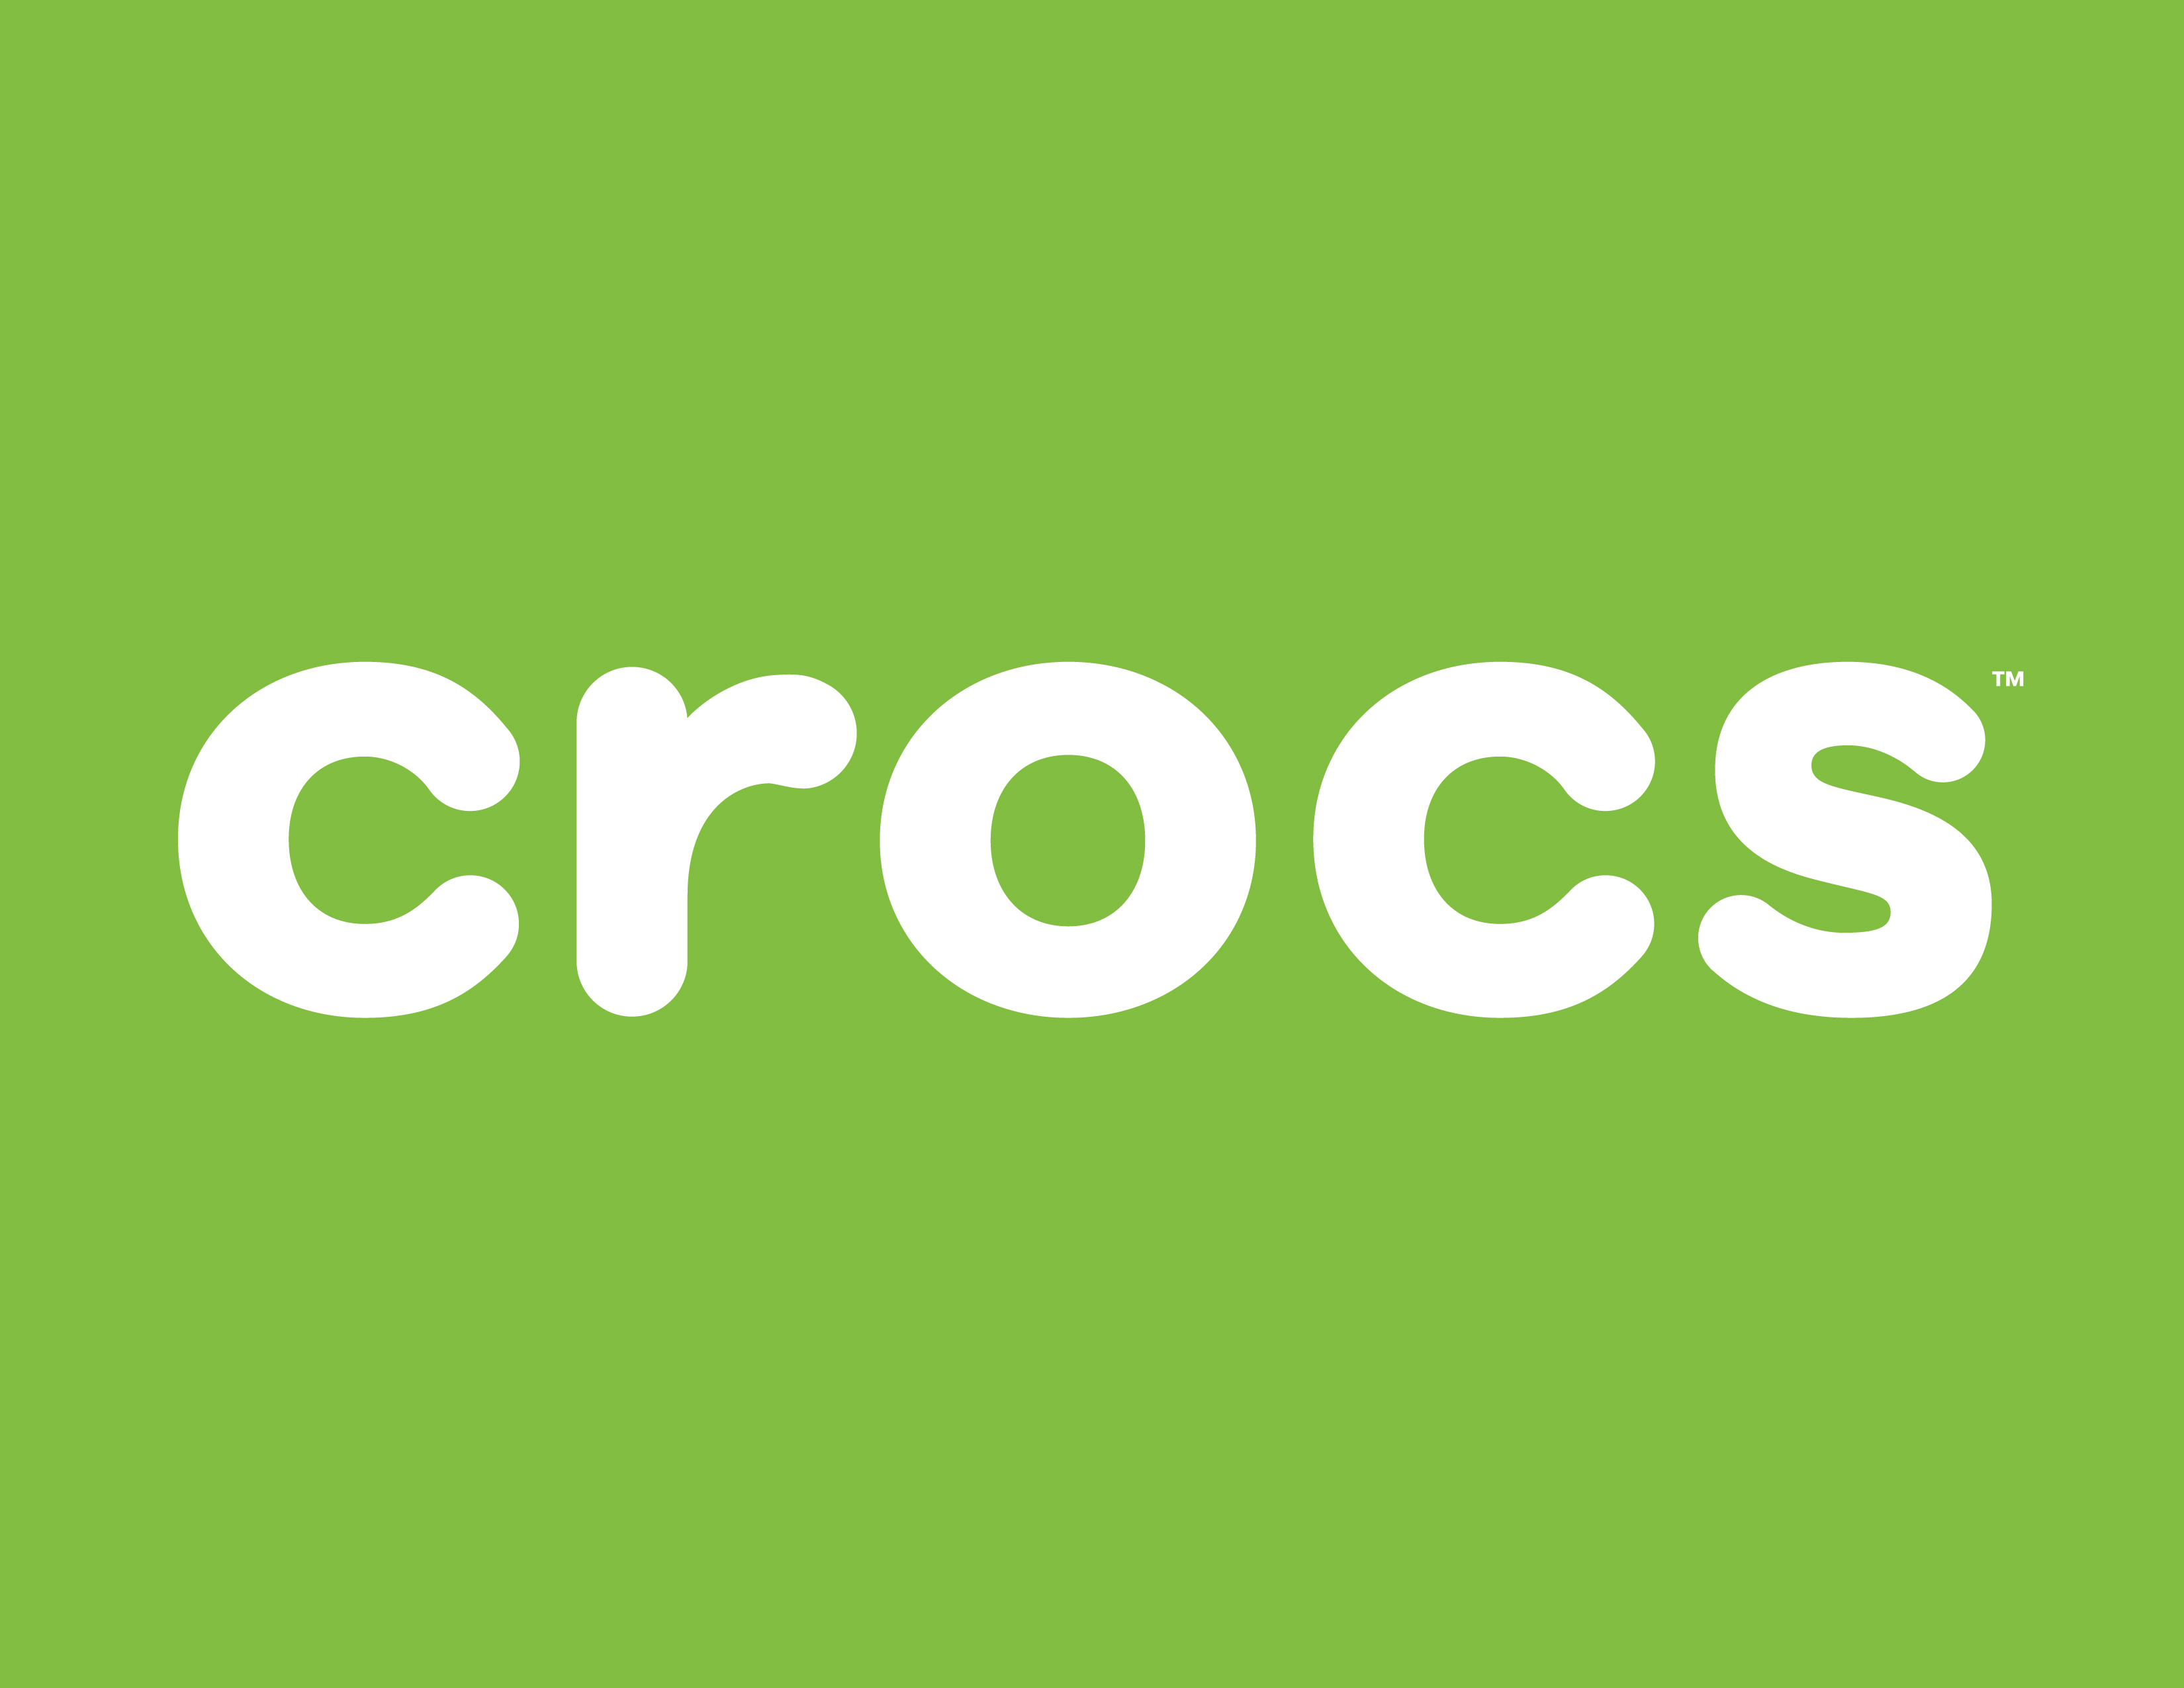 crocs by fam | ららぽーと富士見